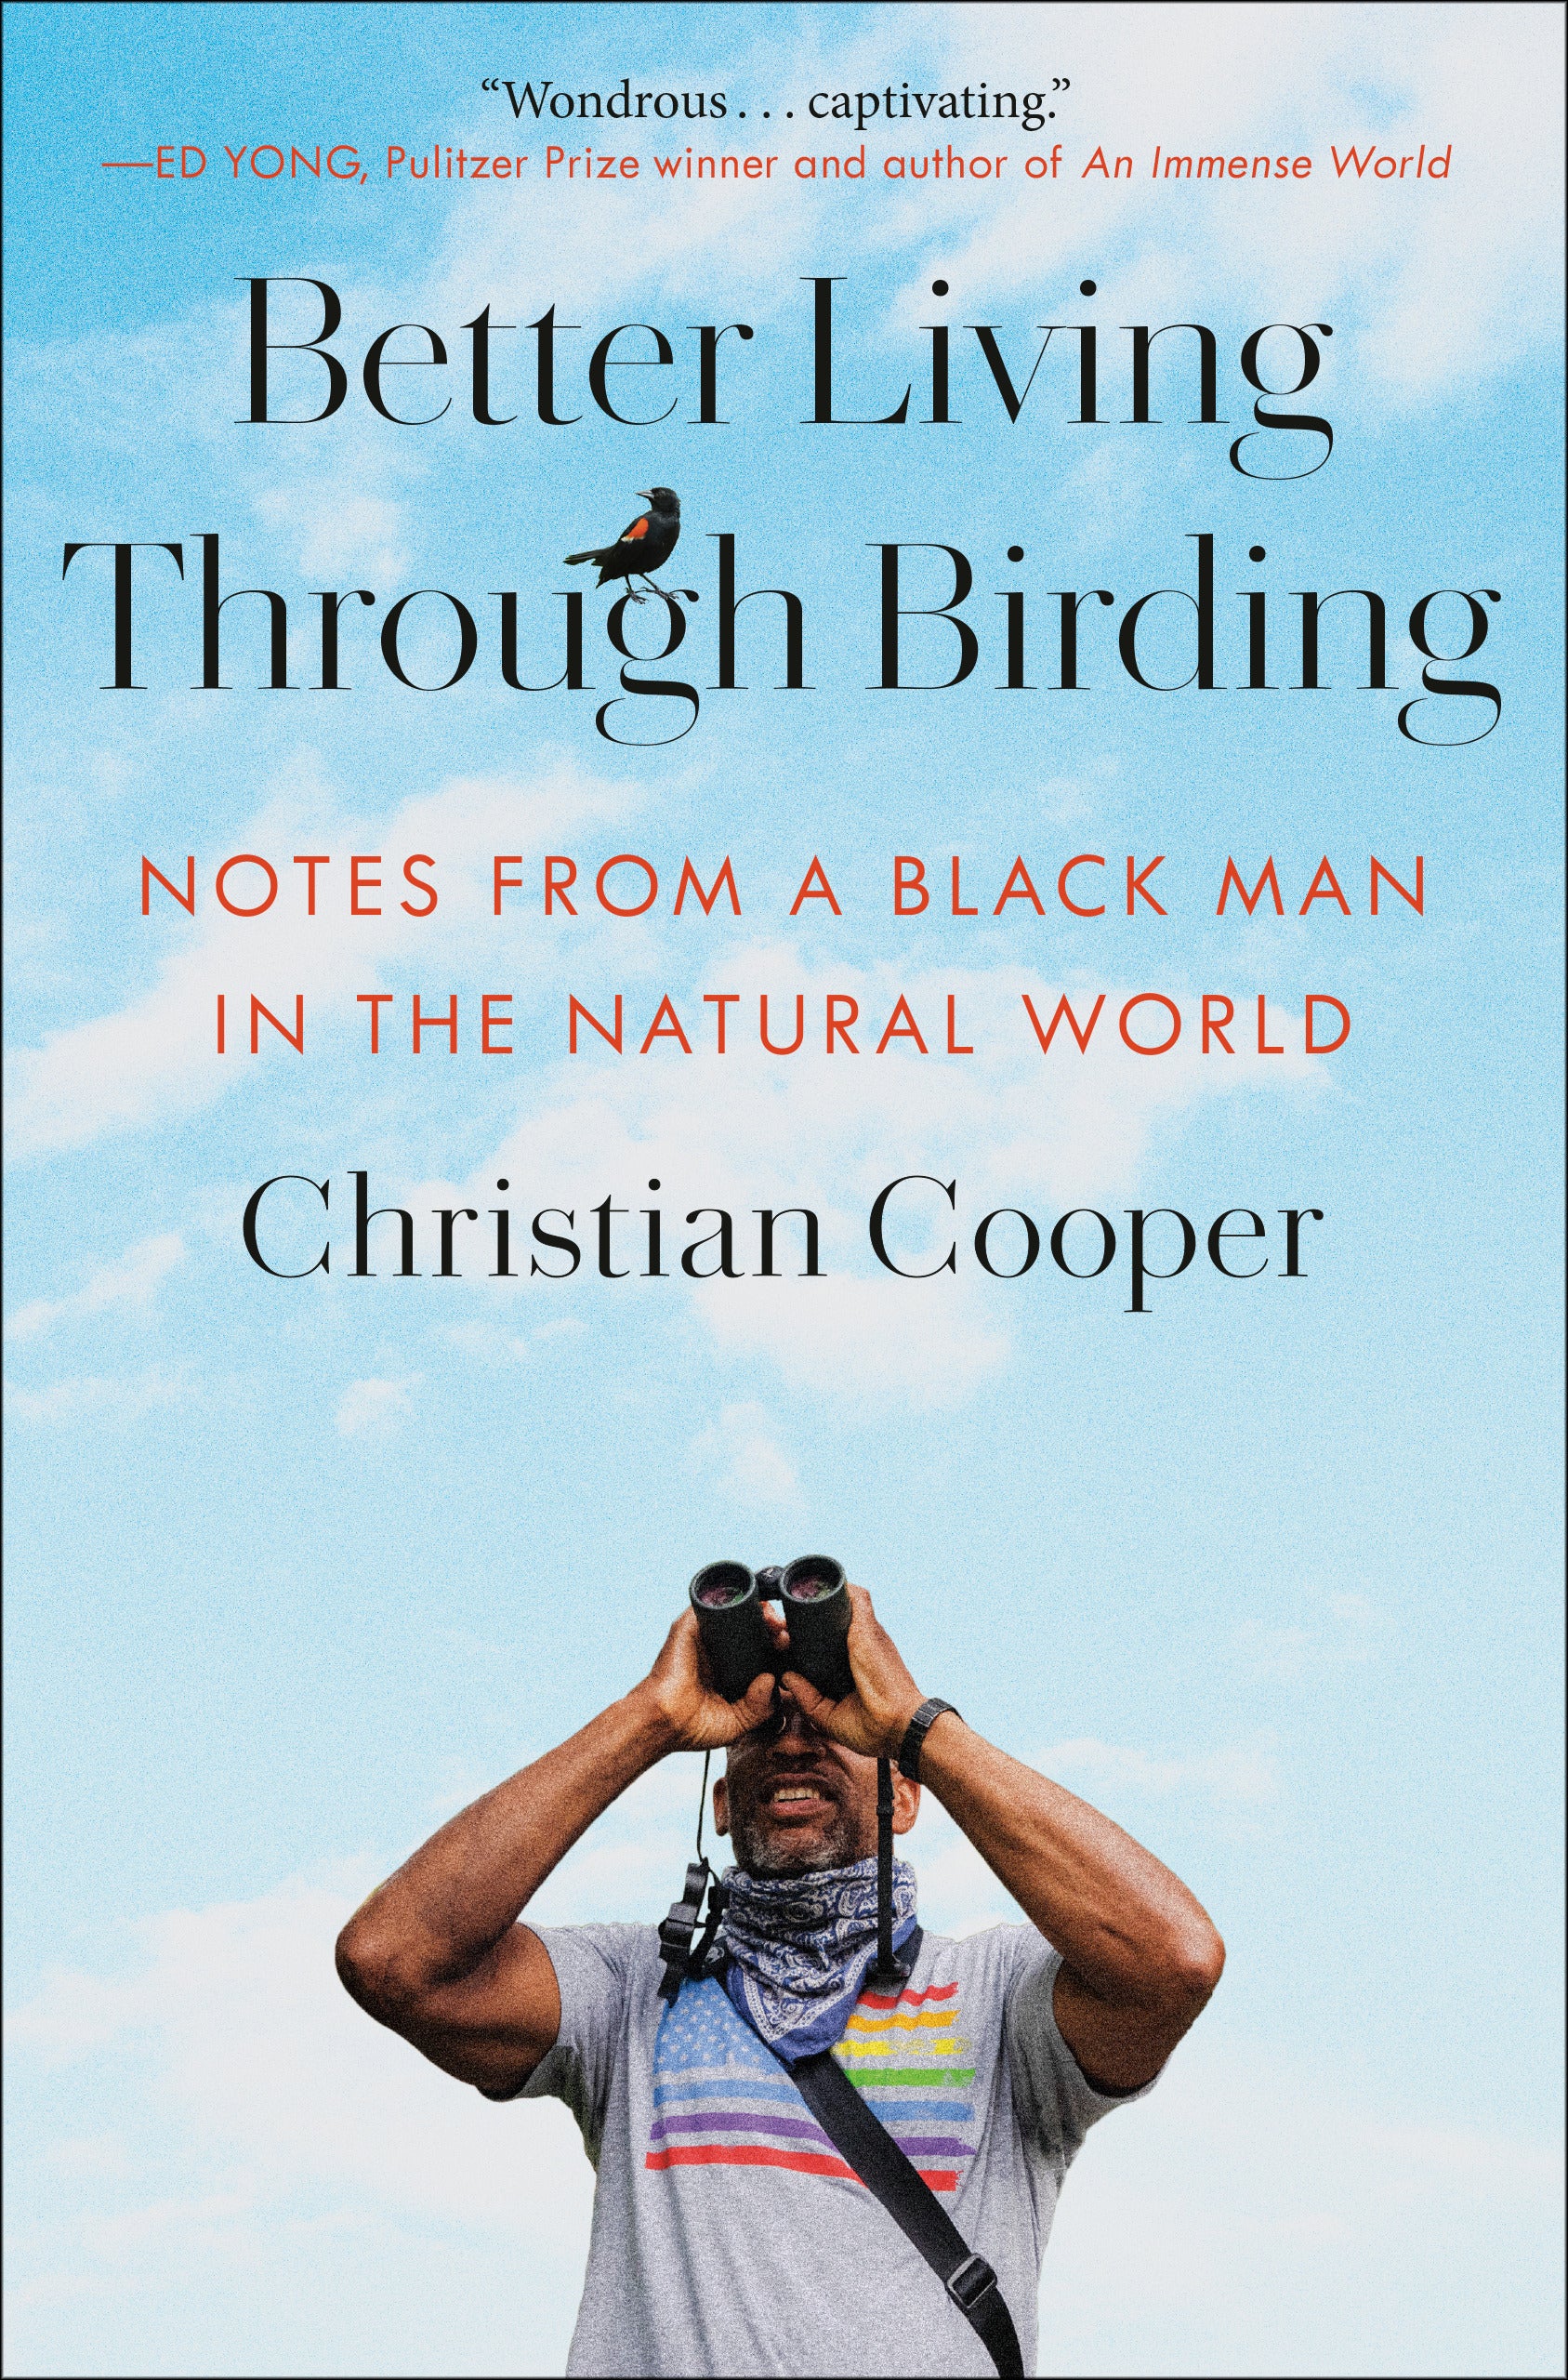 Better Living Through Birding by Christian Cooper